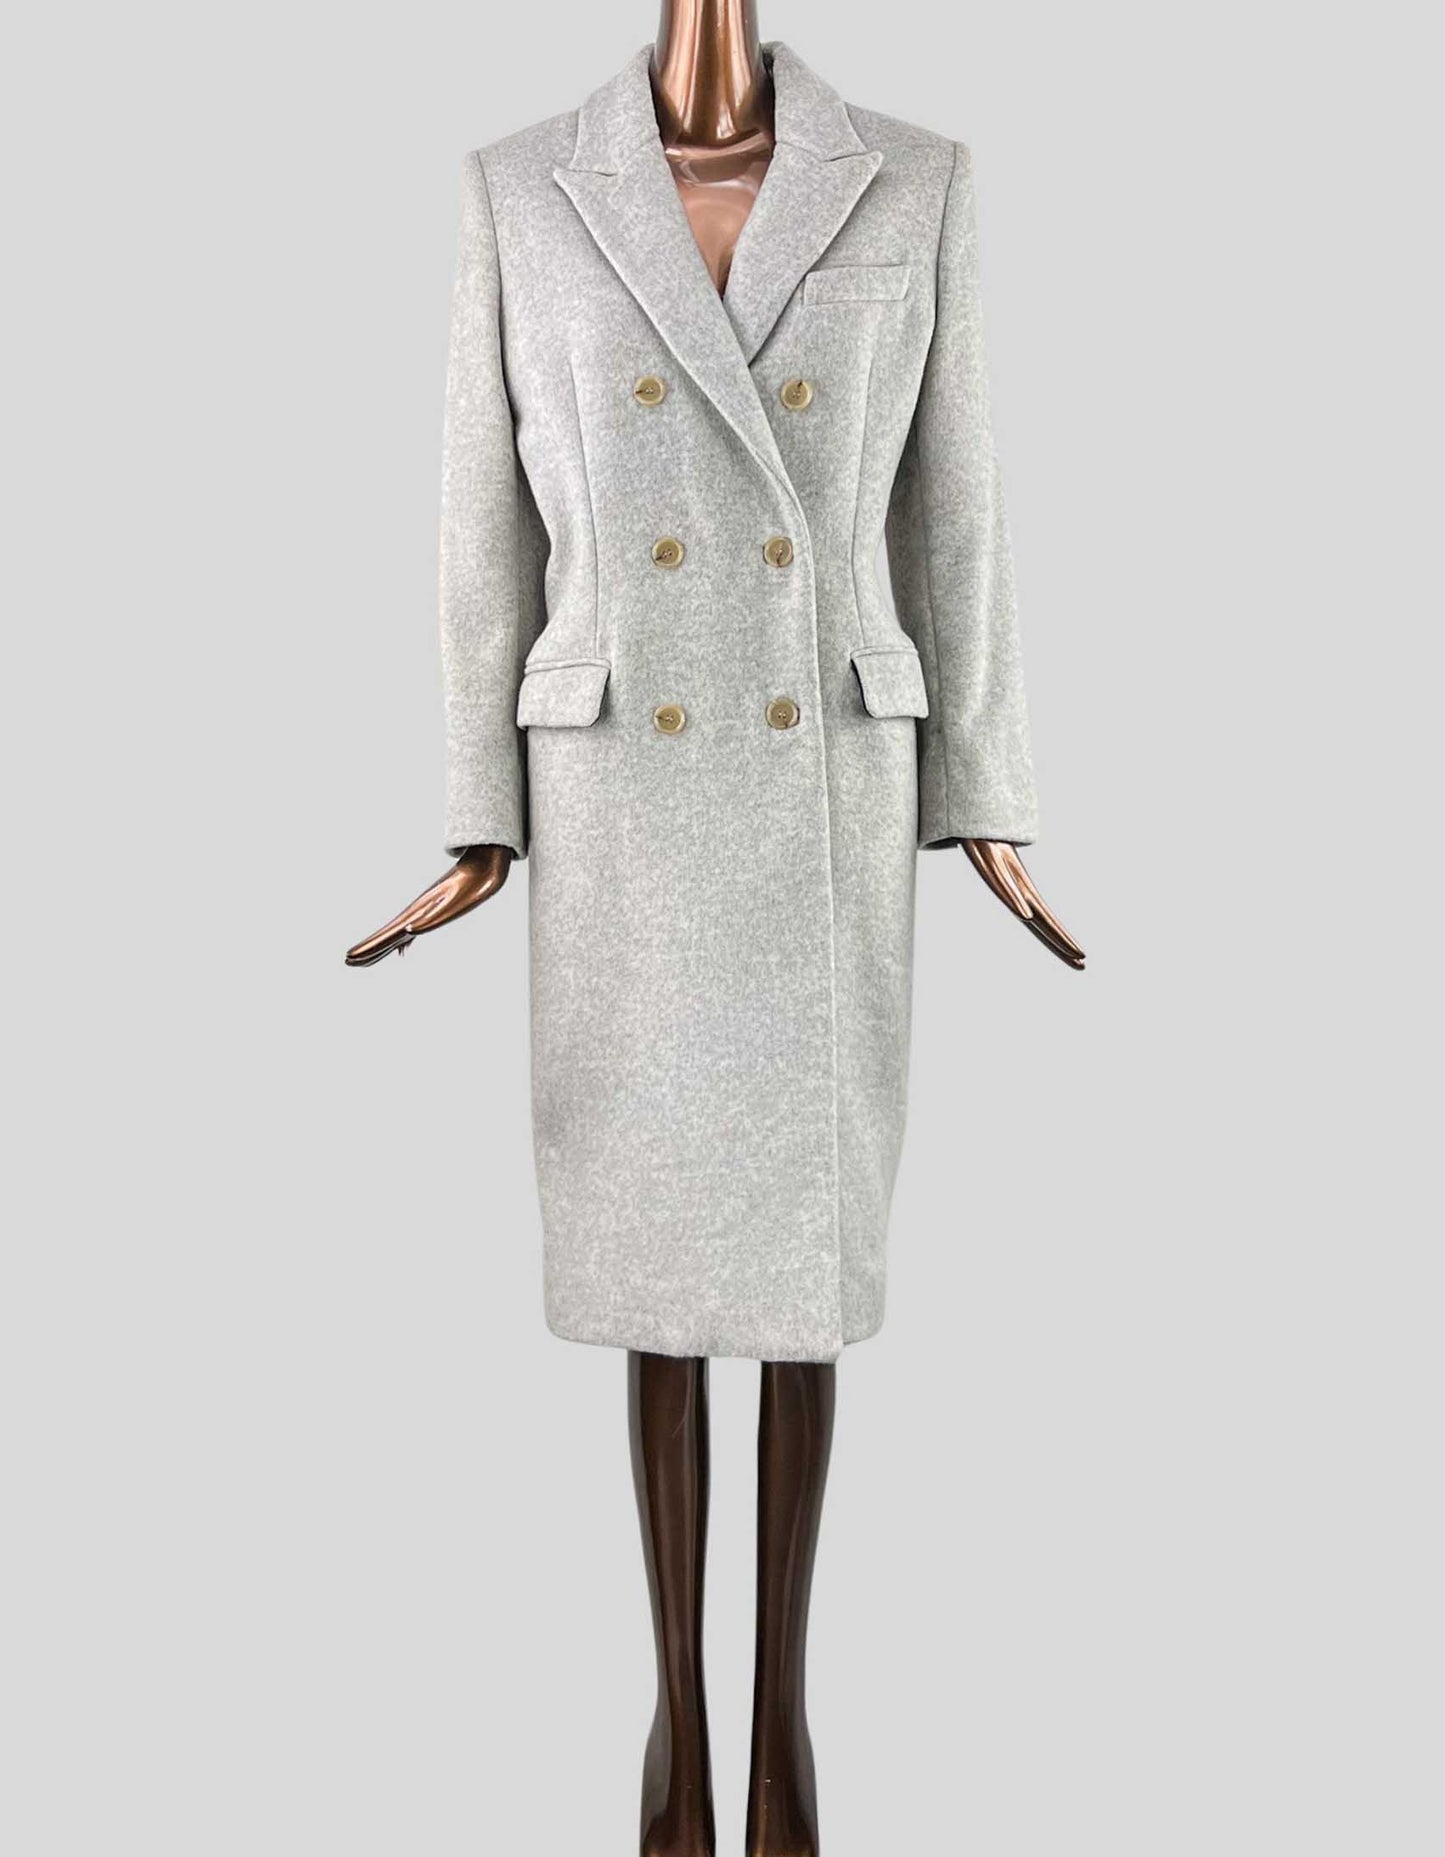 IRO Double-Breasted Wool Coat in Grey Size 36 IT 